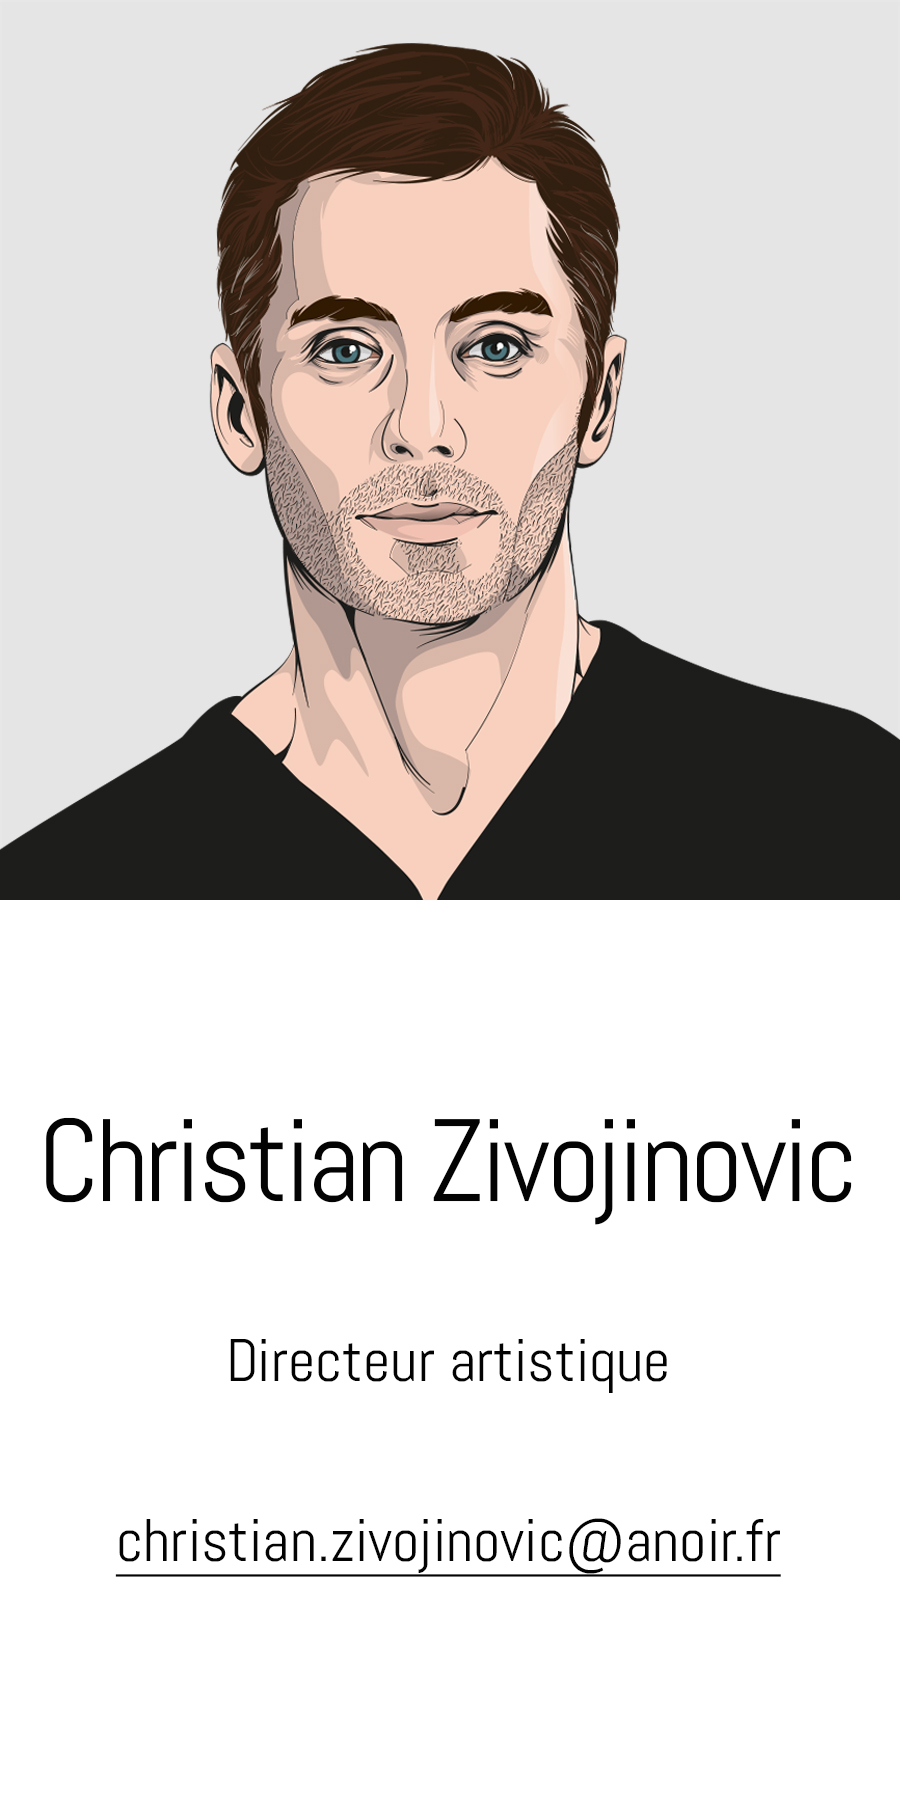 Christian Zivojinovic, A noir